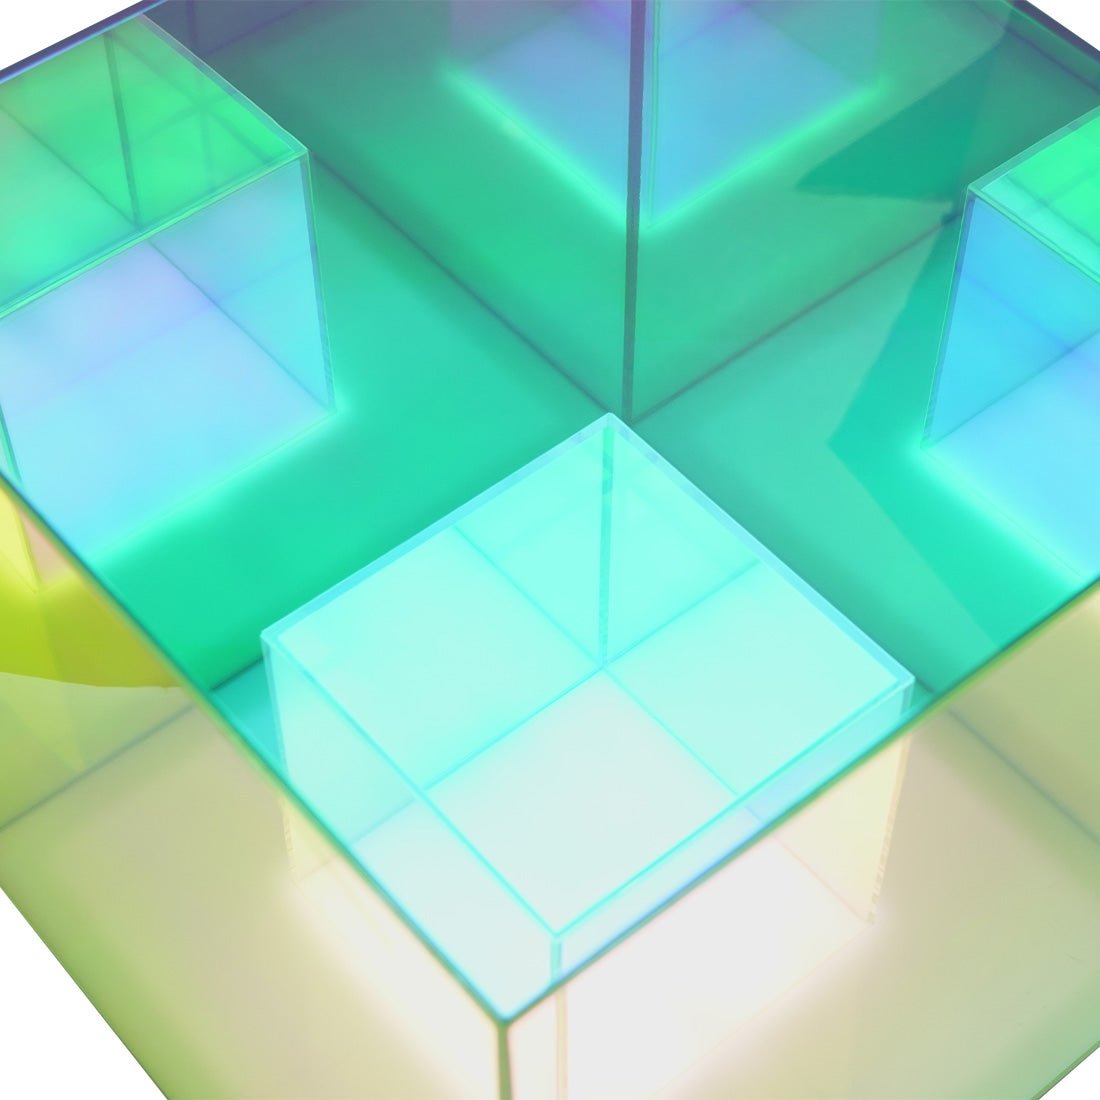 3D Light Cube - إضاءة - Store 974 | ستور ٩٧٤